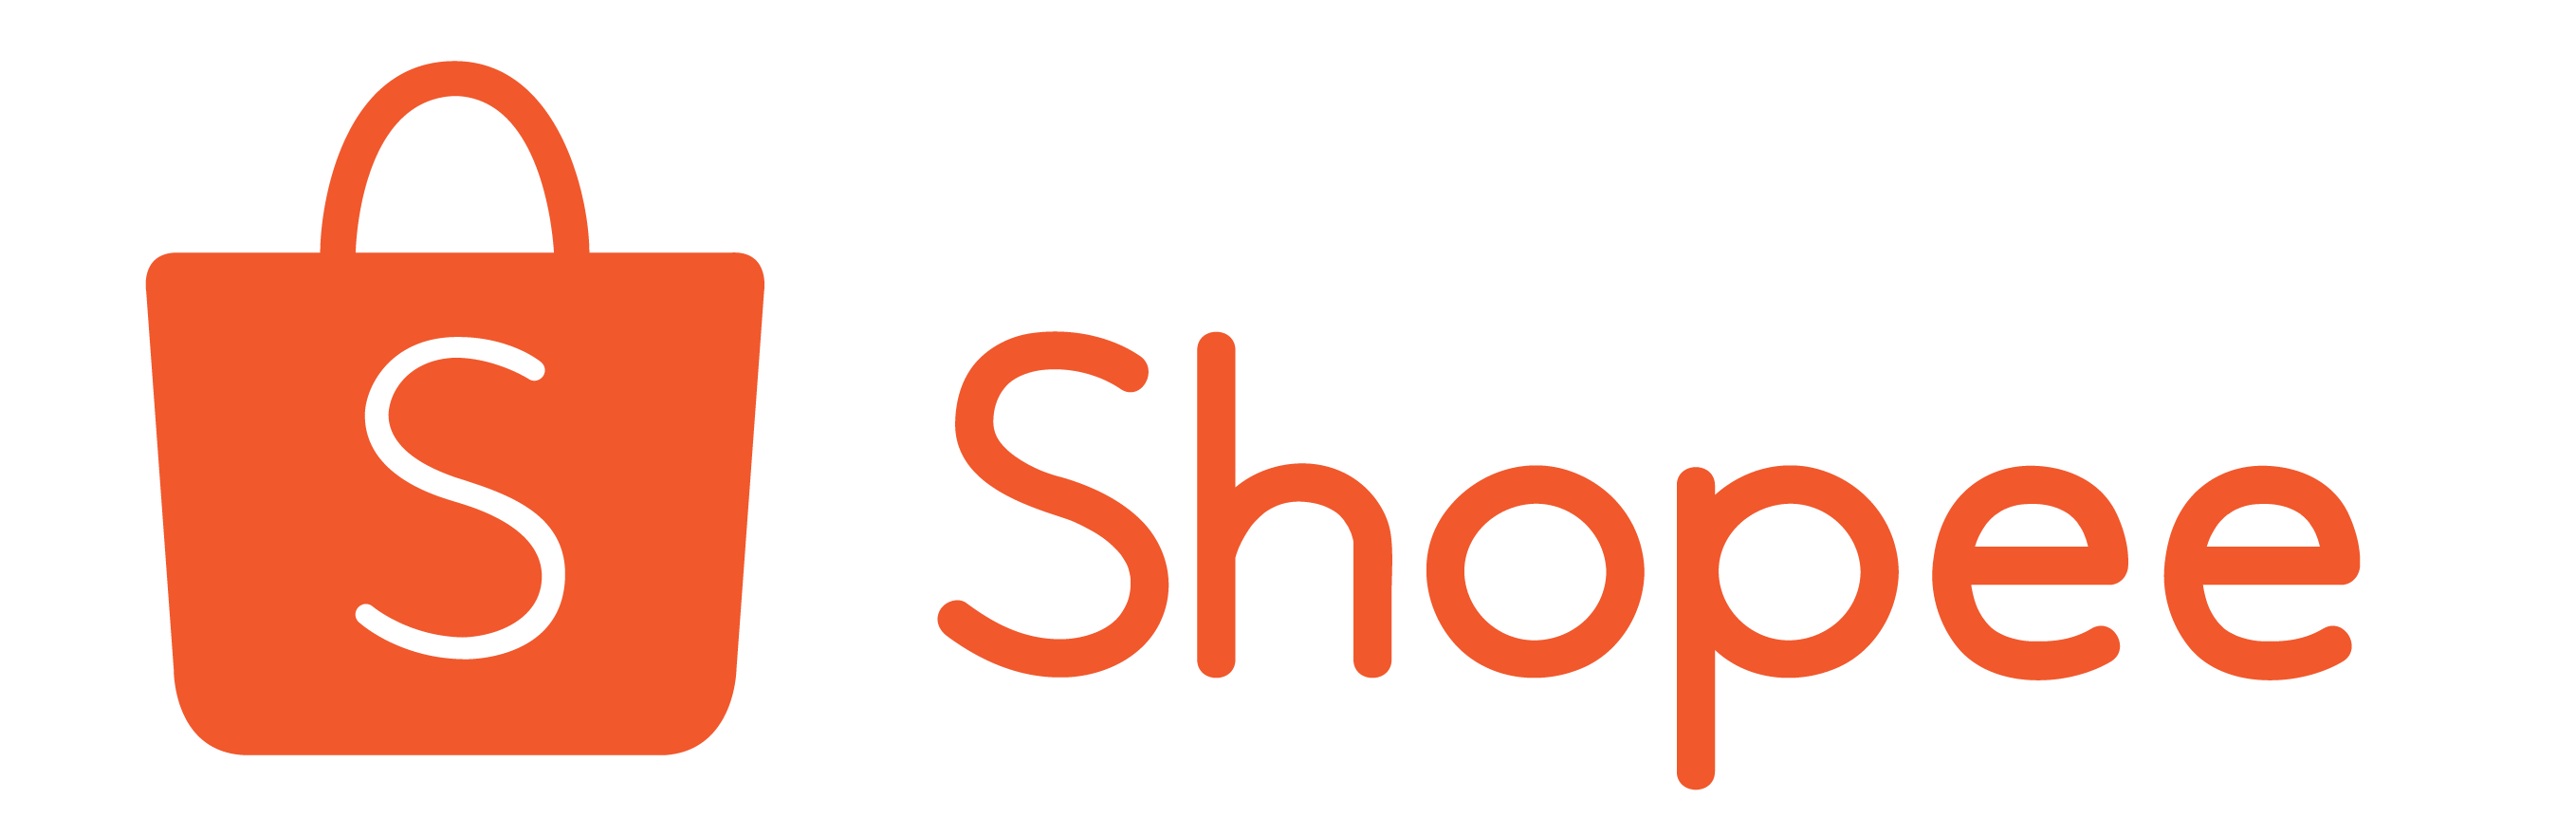 Shopee Logo PNG File HD PNG Image